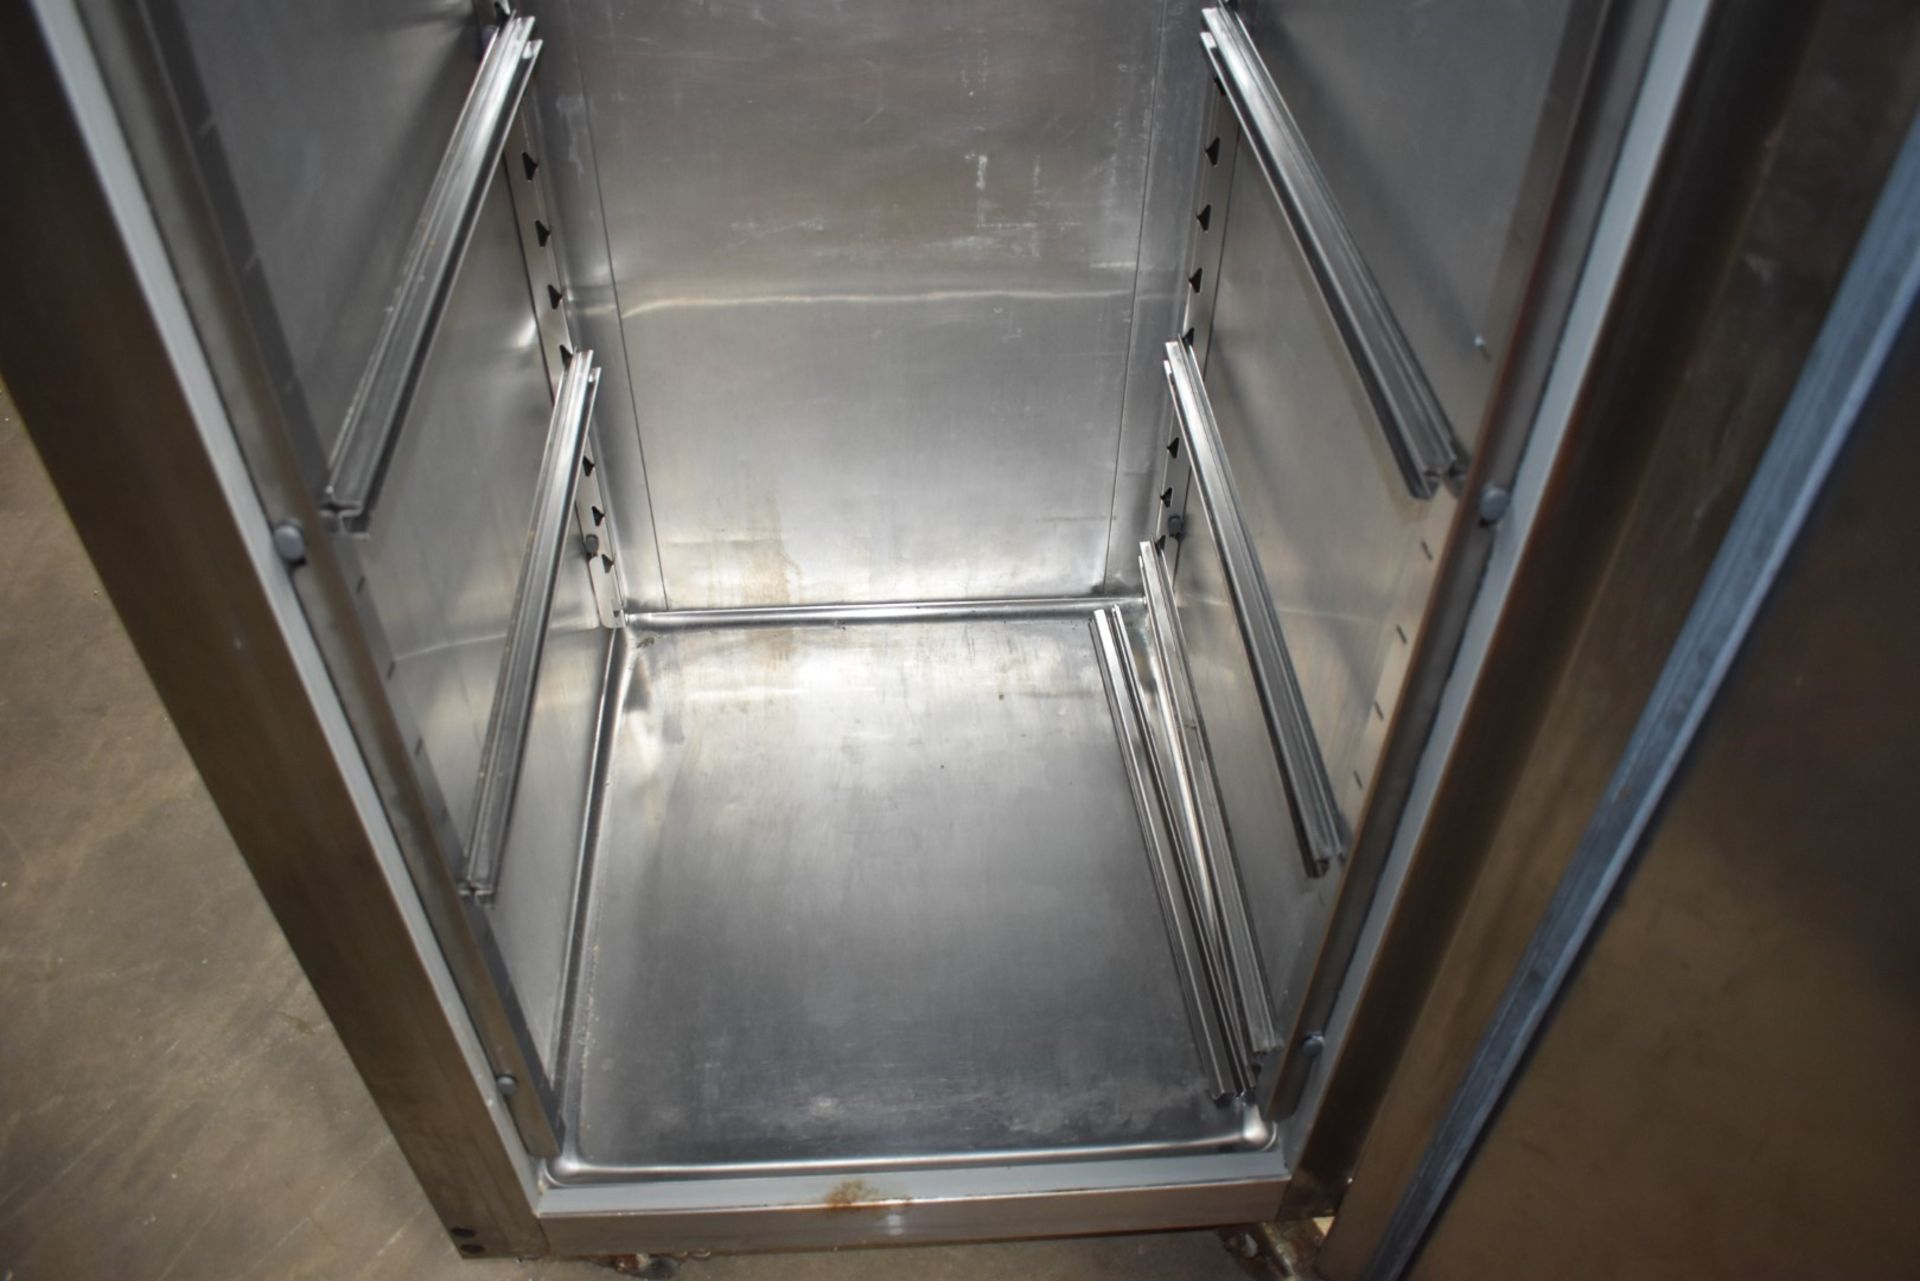 1 x Williams Jade Upright Single Door Refrigerator With Stainless Steel Exterior - Model HJ1TSA - - Image 11 of 11